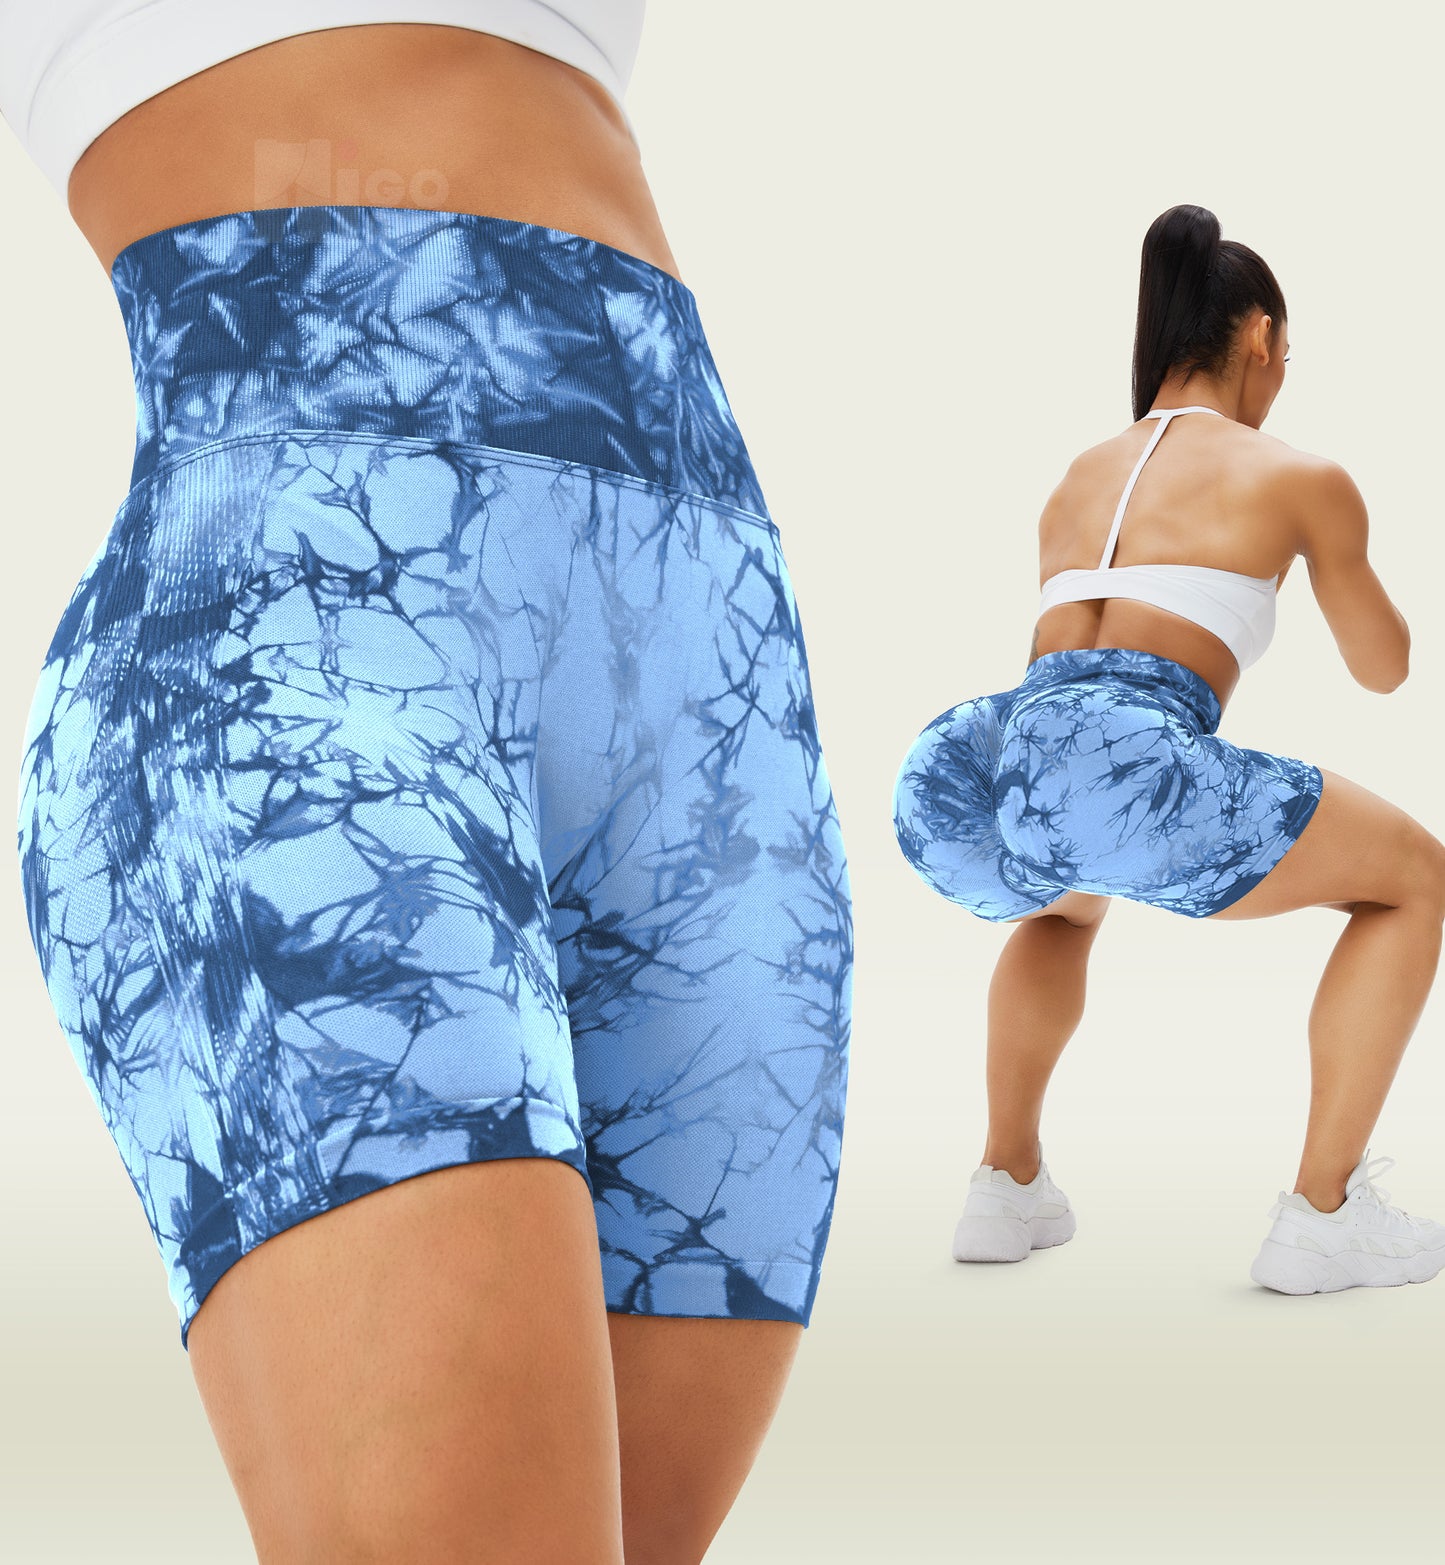 HIGORUN Women's Seamless Workout Shorts Gym Yoga High Waist Smile Contour Cycling Shorts tie dye blue